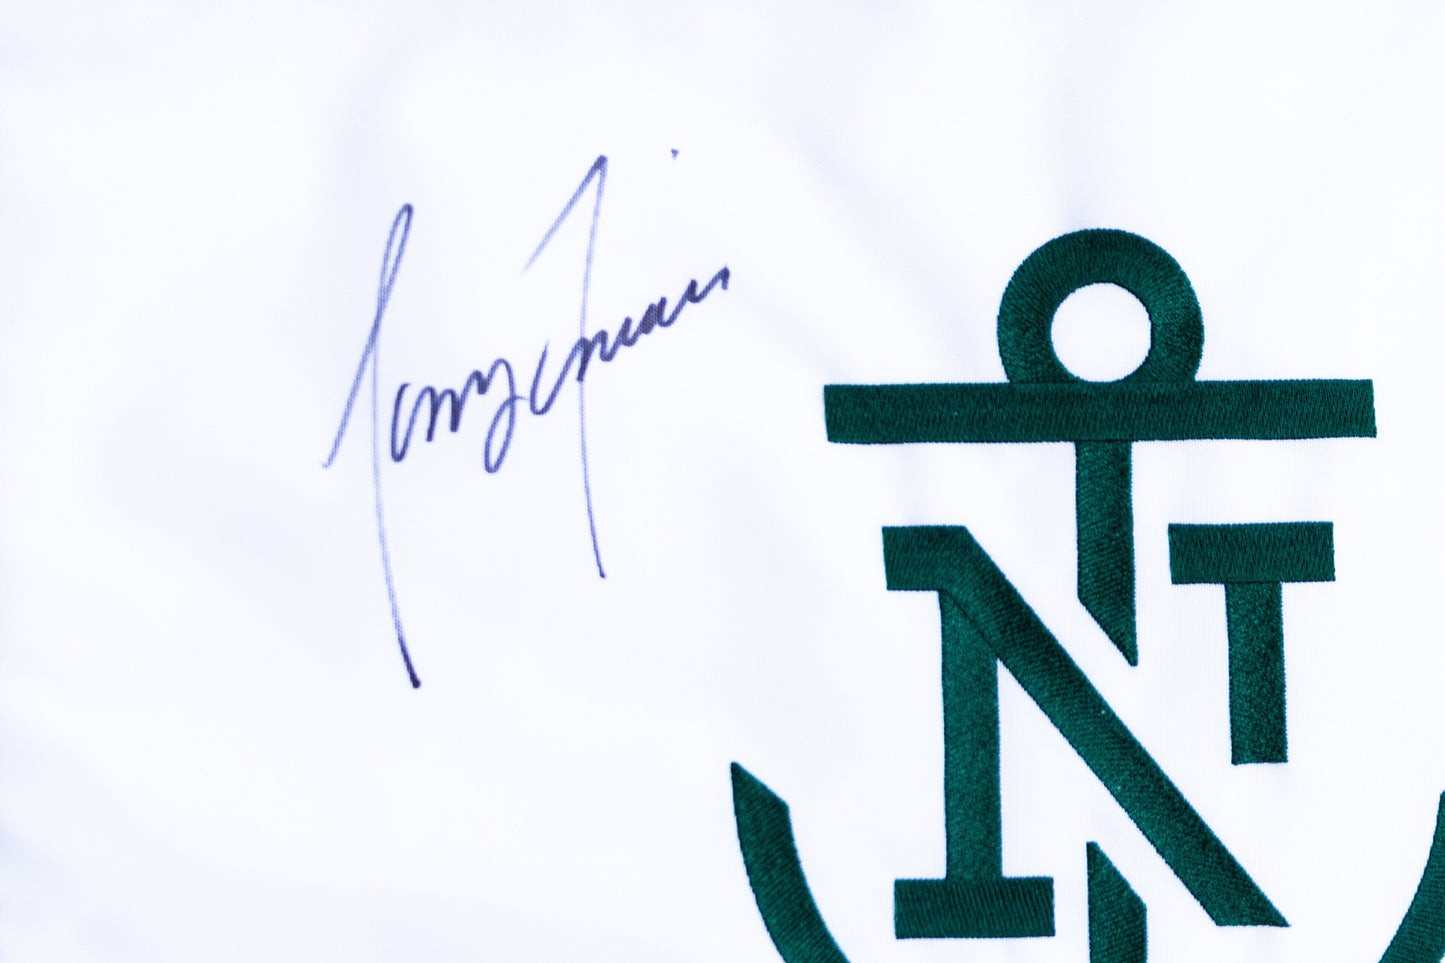 Tony Finau Signed Northern Trust Flag